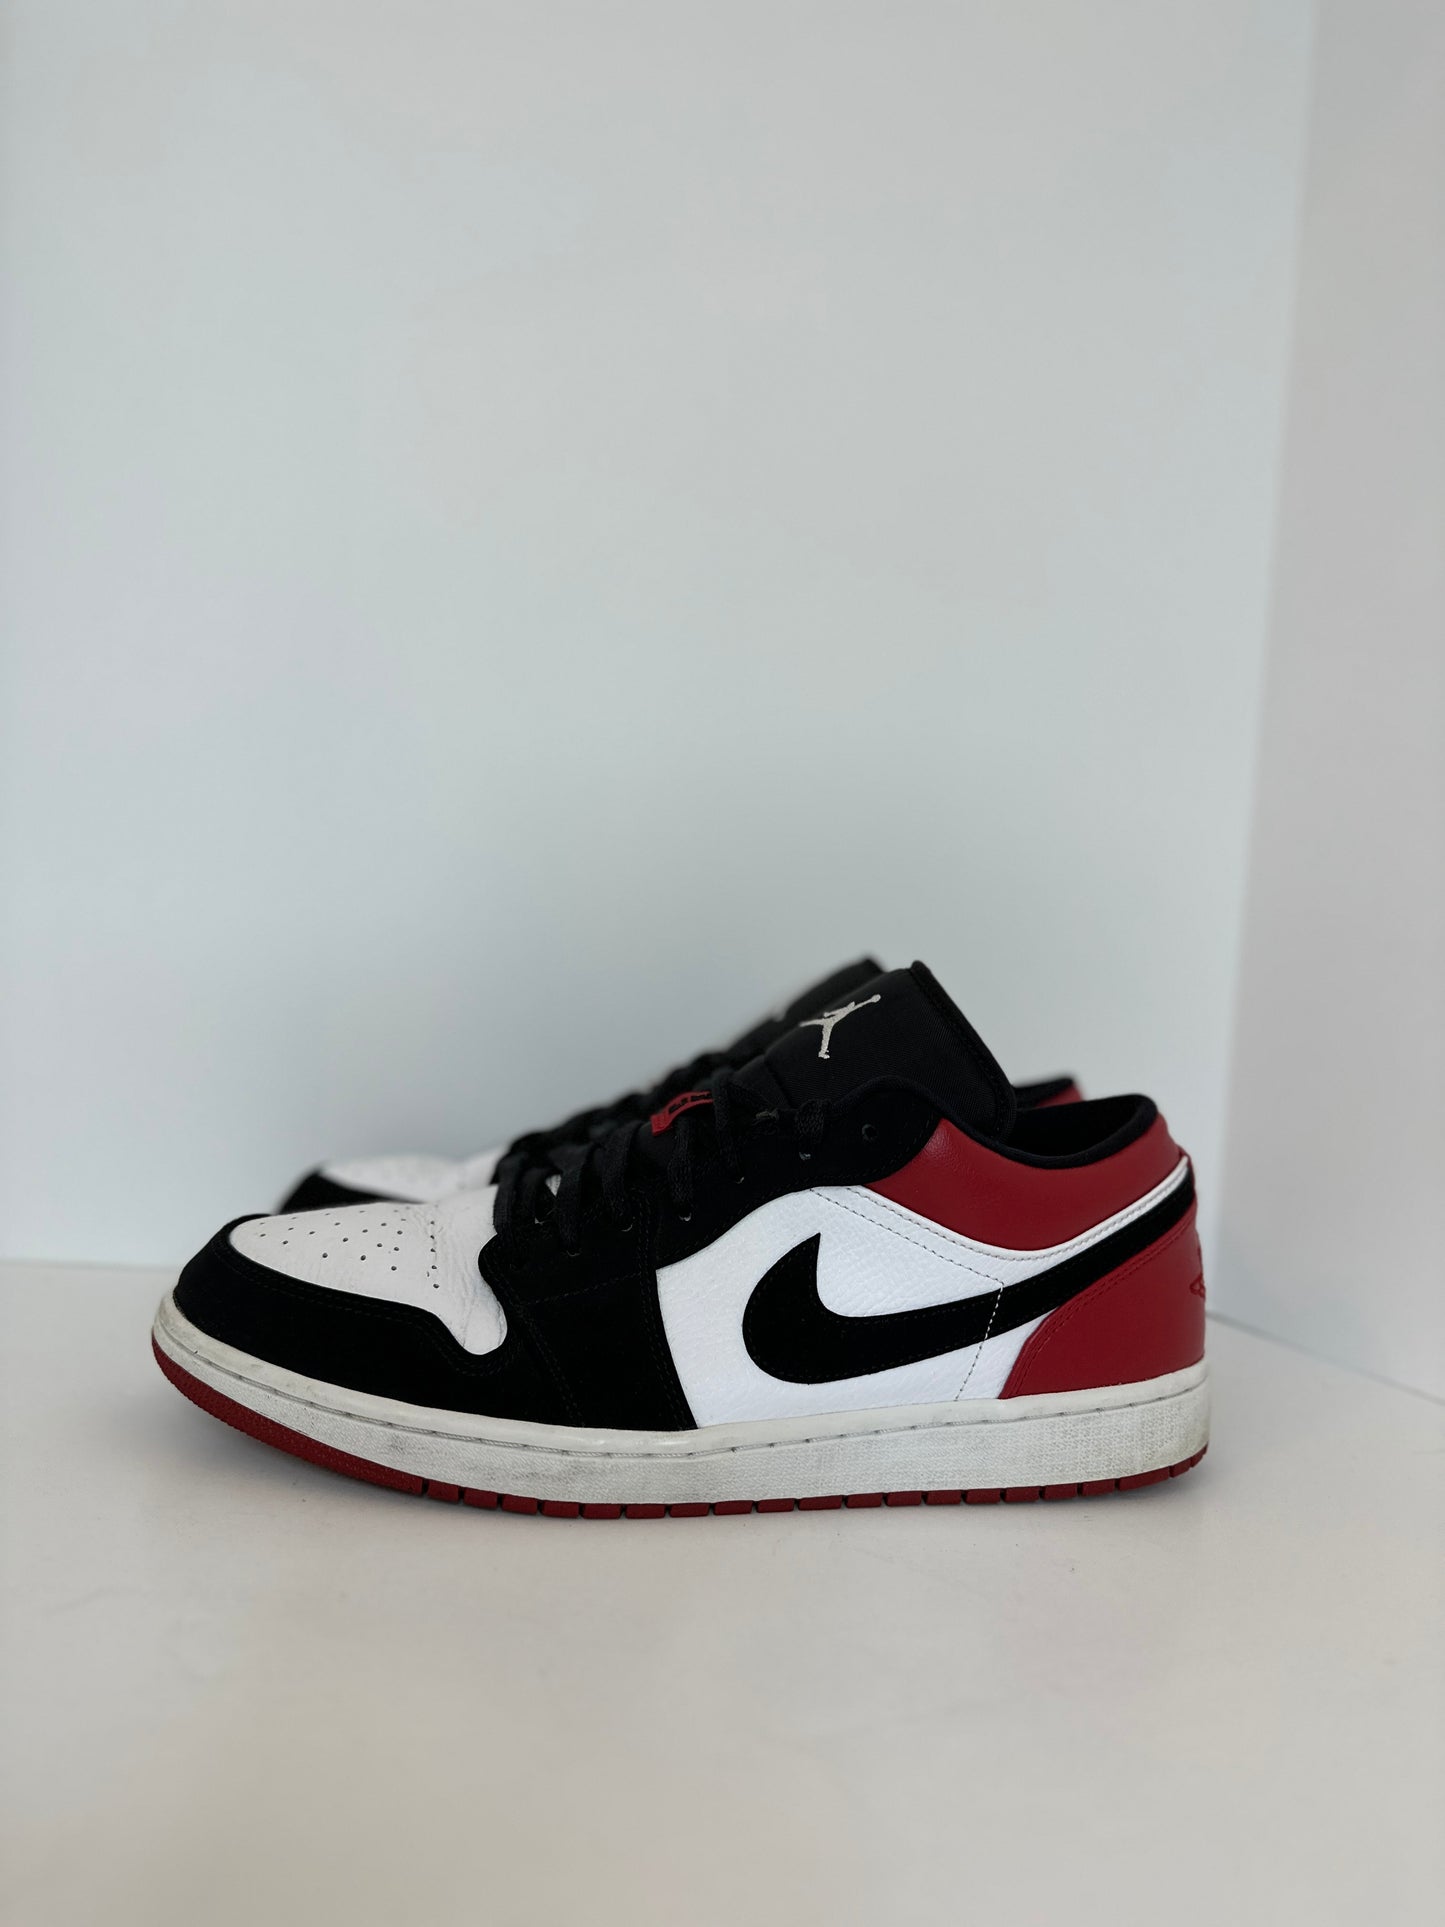 Jordan 1 Low Black Toe (2019) Size 13 Used